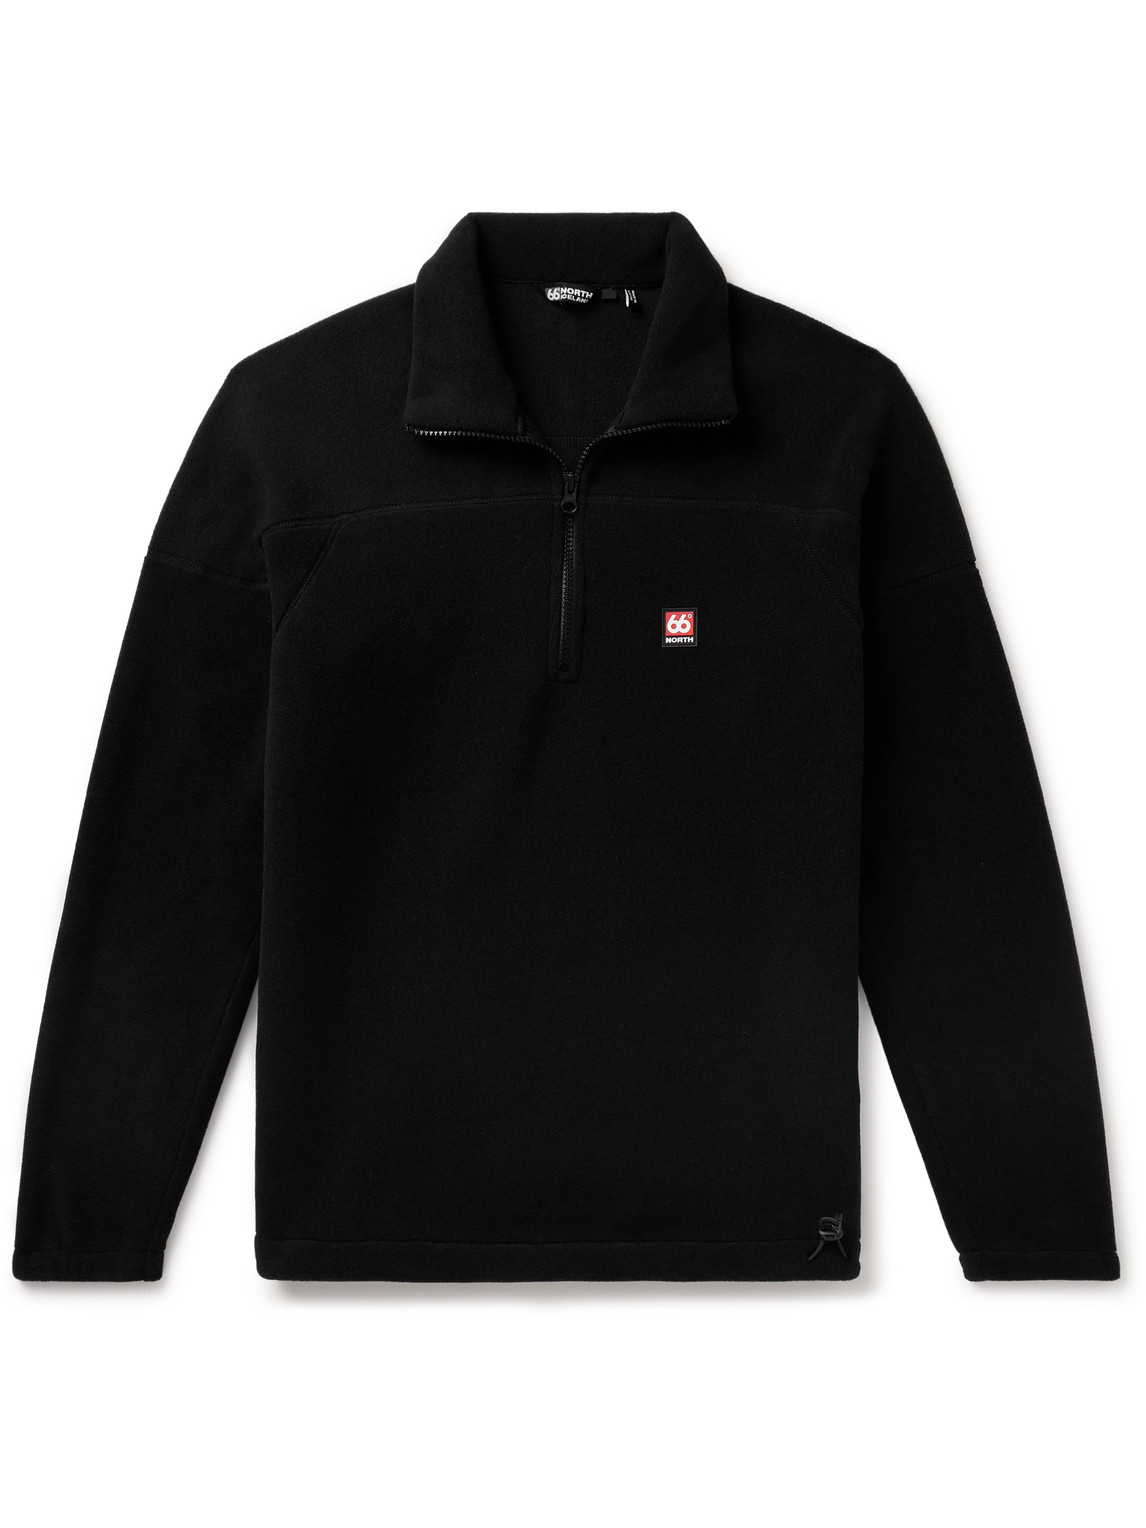 66 North - Esja Logo-Appliquéd Fleece Half-Zip Sweatshirt - Men - Black - XL von 66 North